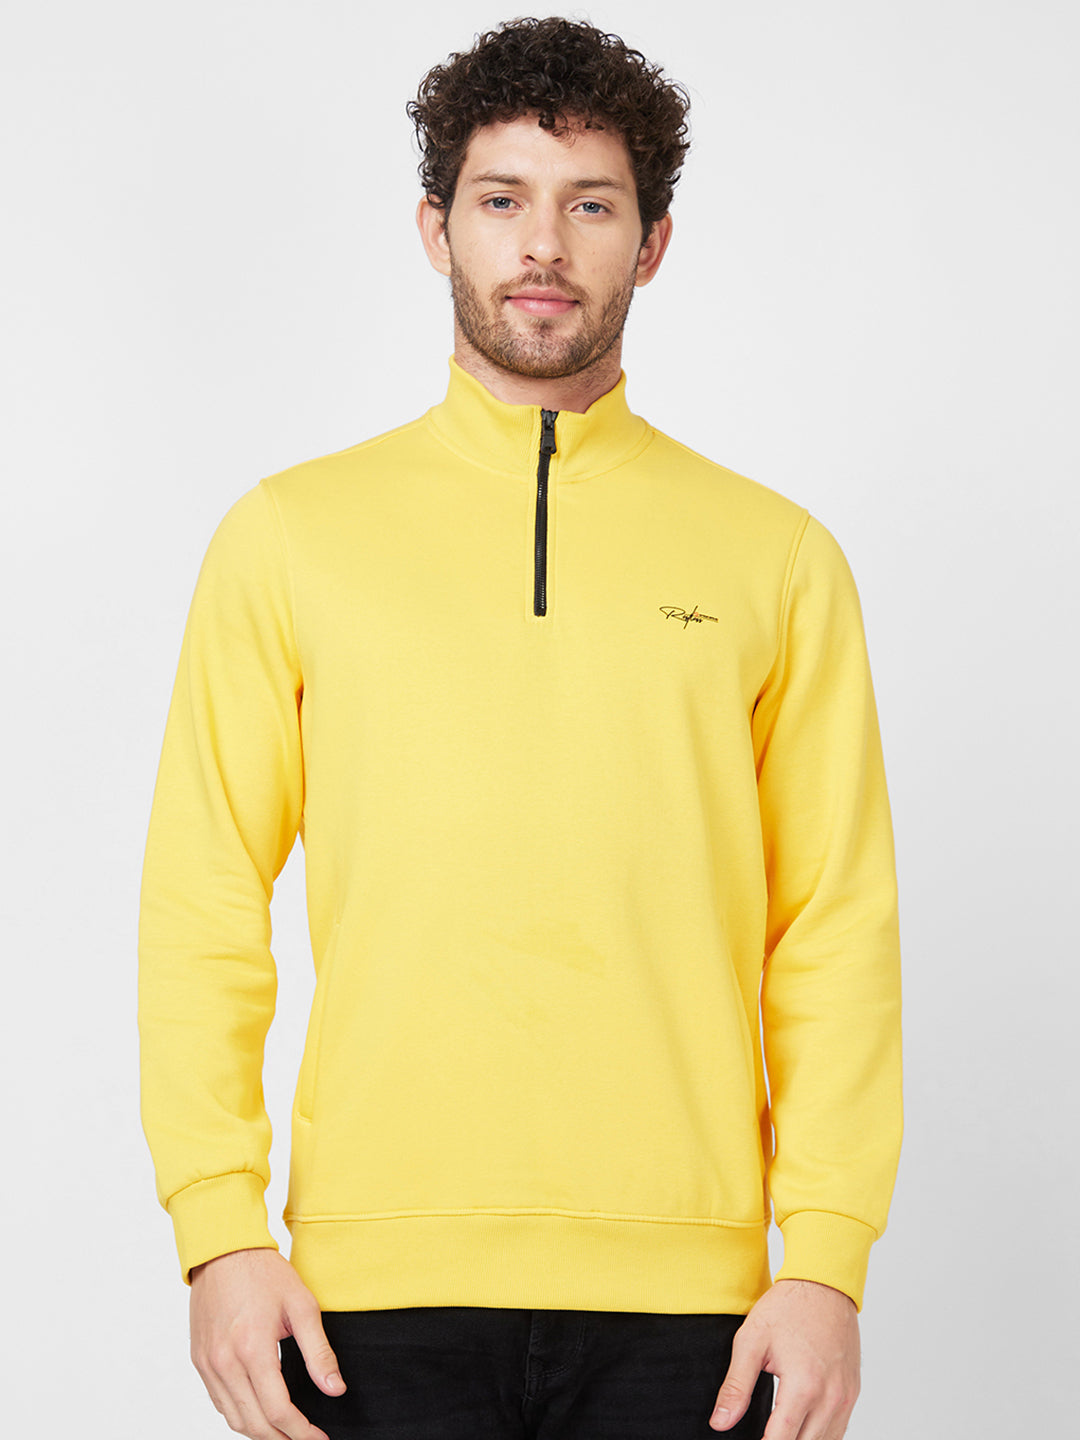 Spykar High Neck Full Sleeve Yellow Sweatshirt For Men